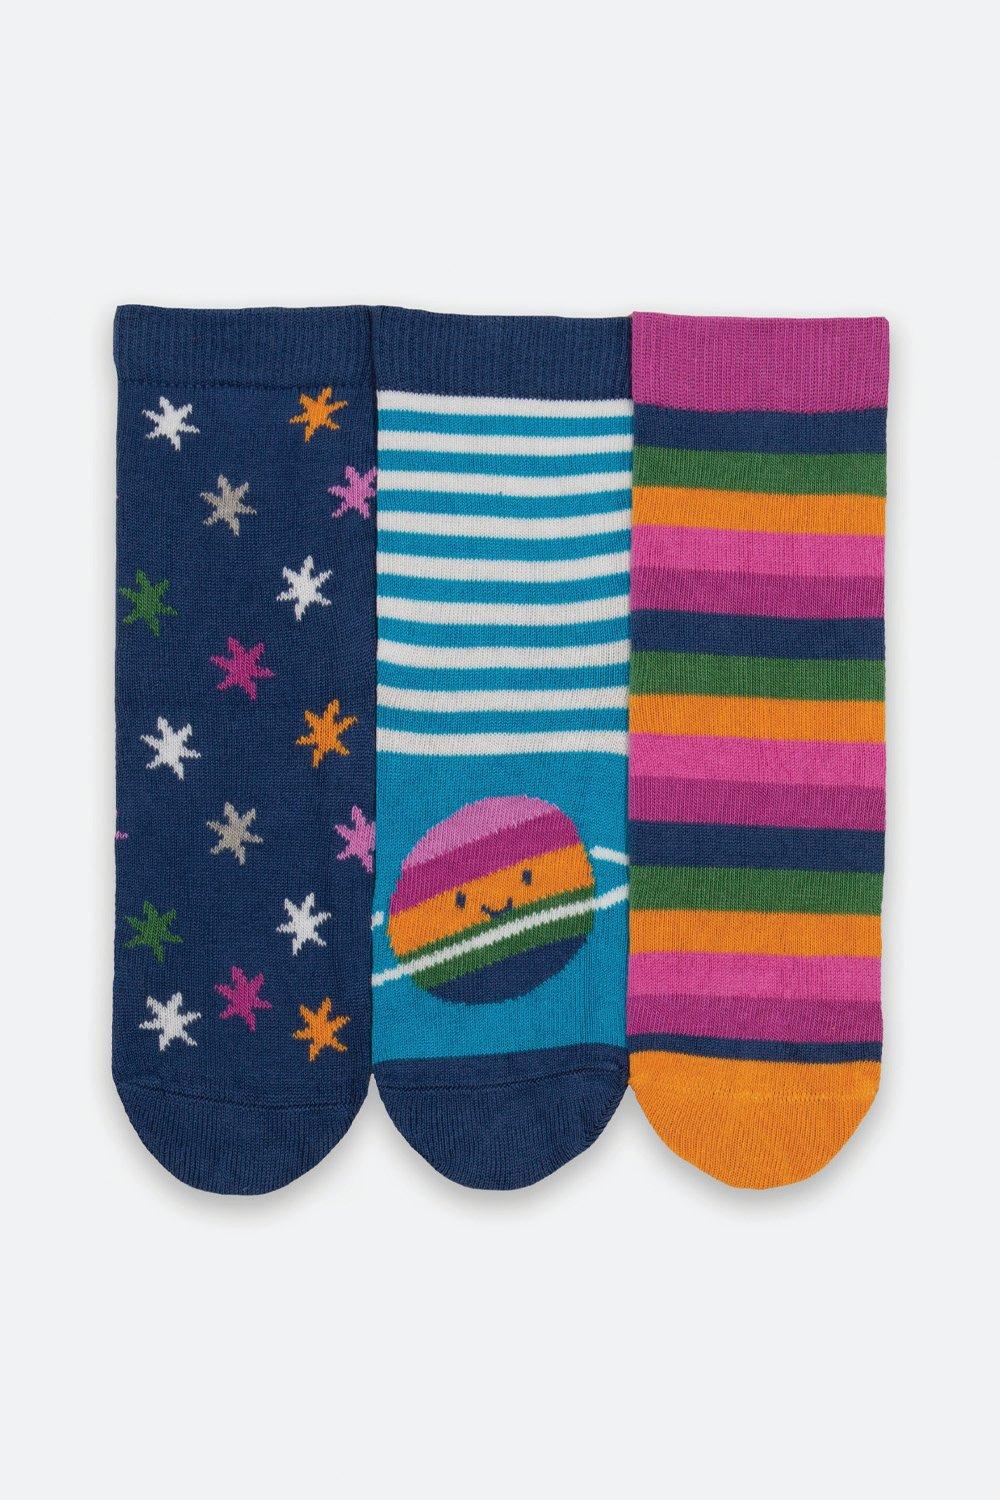 Starburst Socks